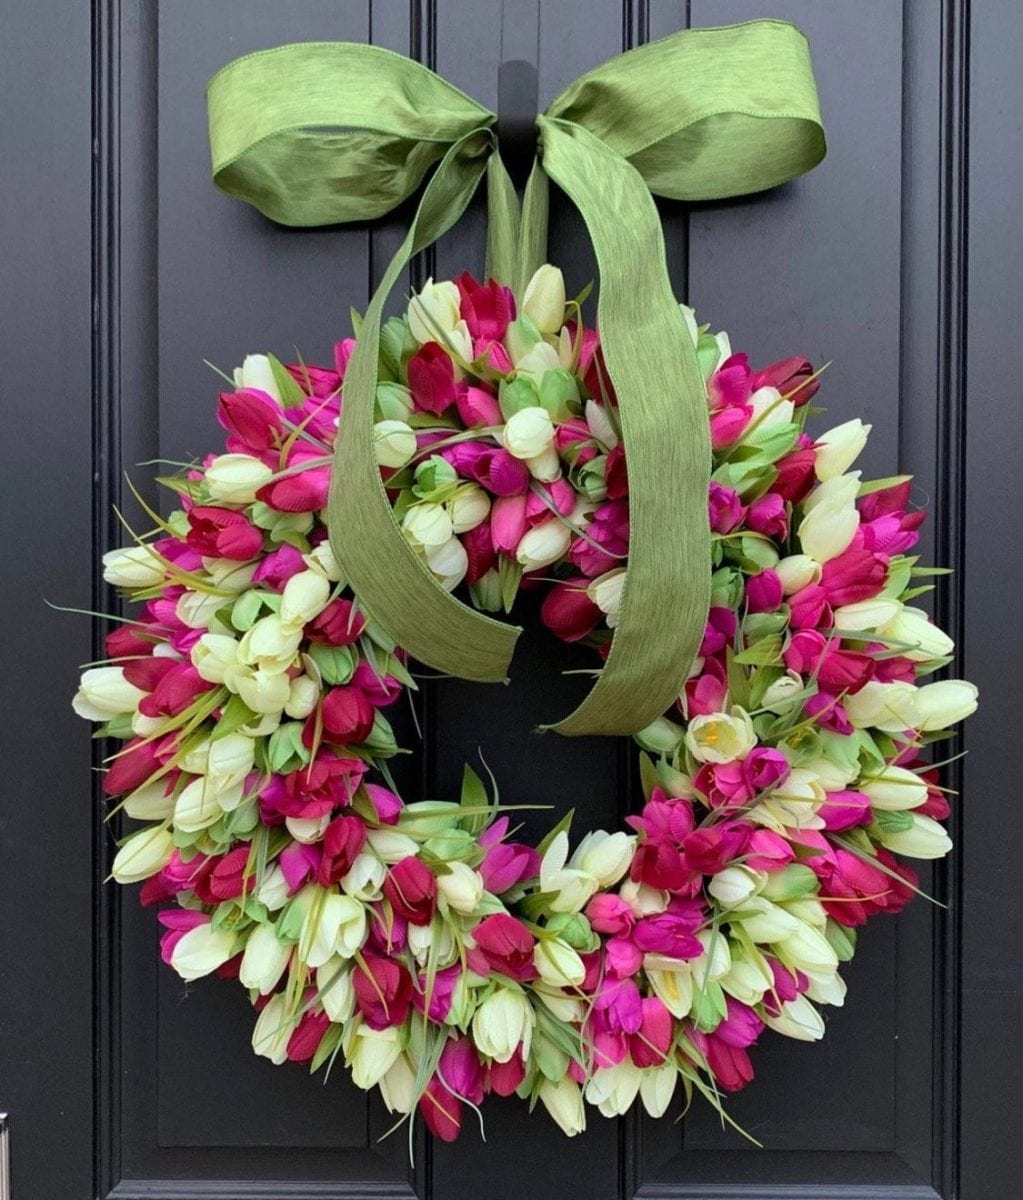 TOYANDONA Artificial Flower Wreath Tulip Front Door Wreath Spring Wreath Green Leaves Wreath Front Door Decorations Wedding Spring Decoration 